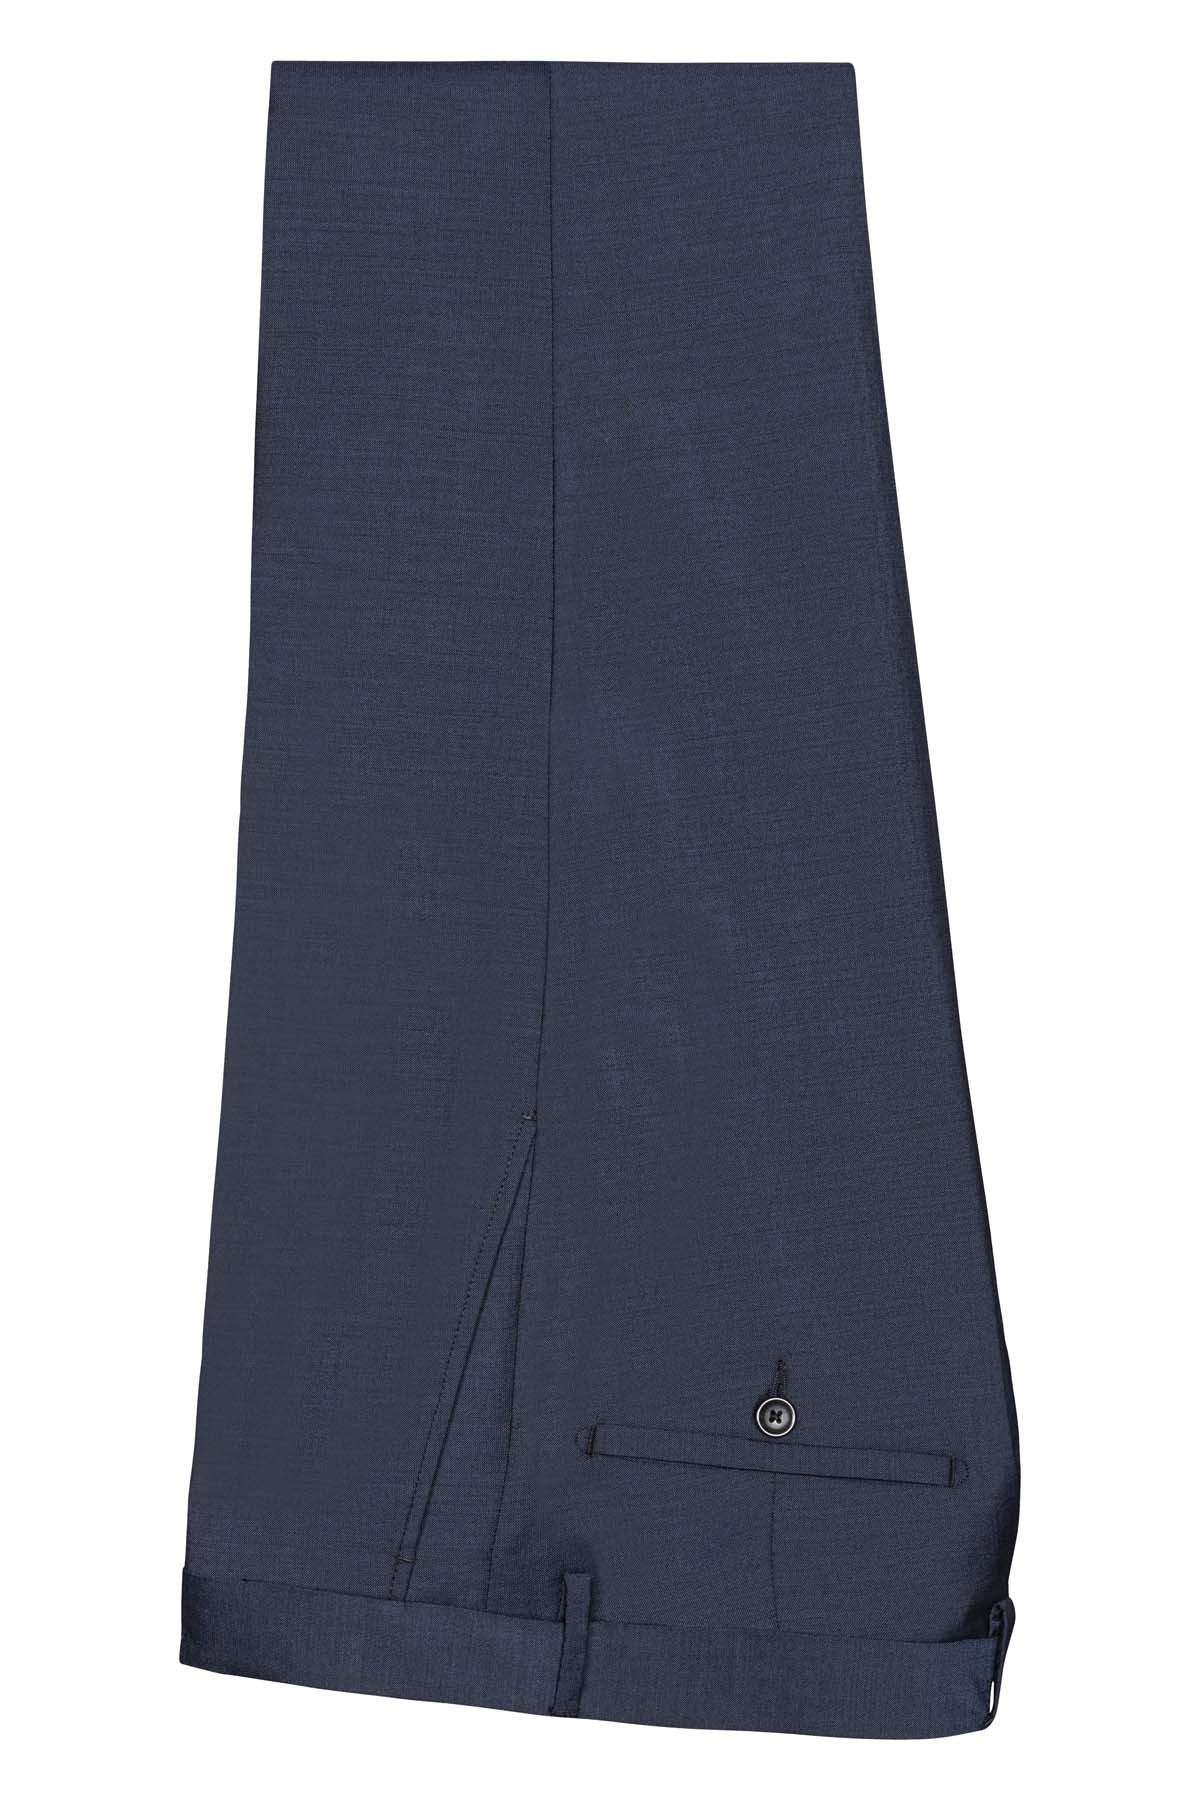 pantalon bleu marine en laine mélangée bayard